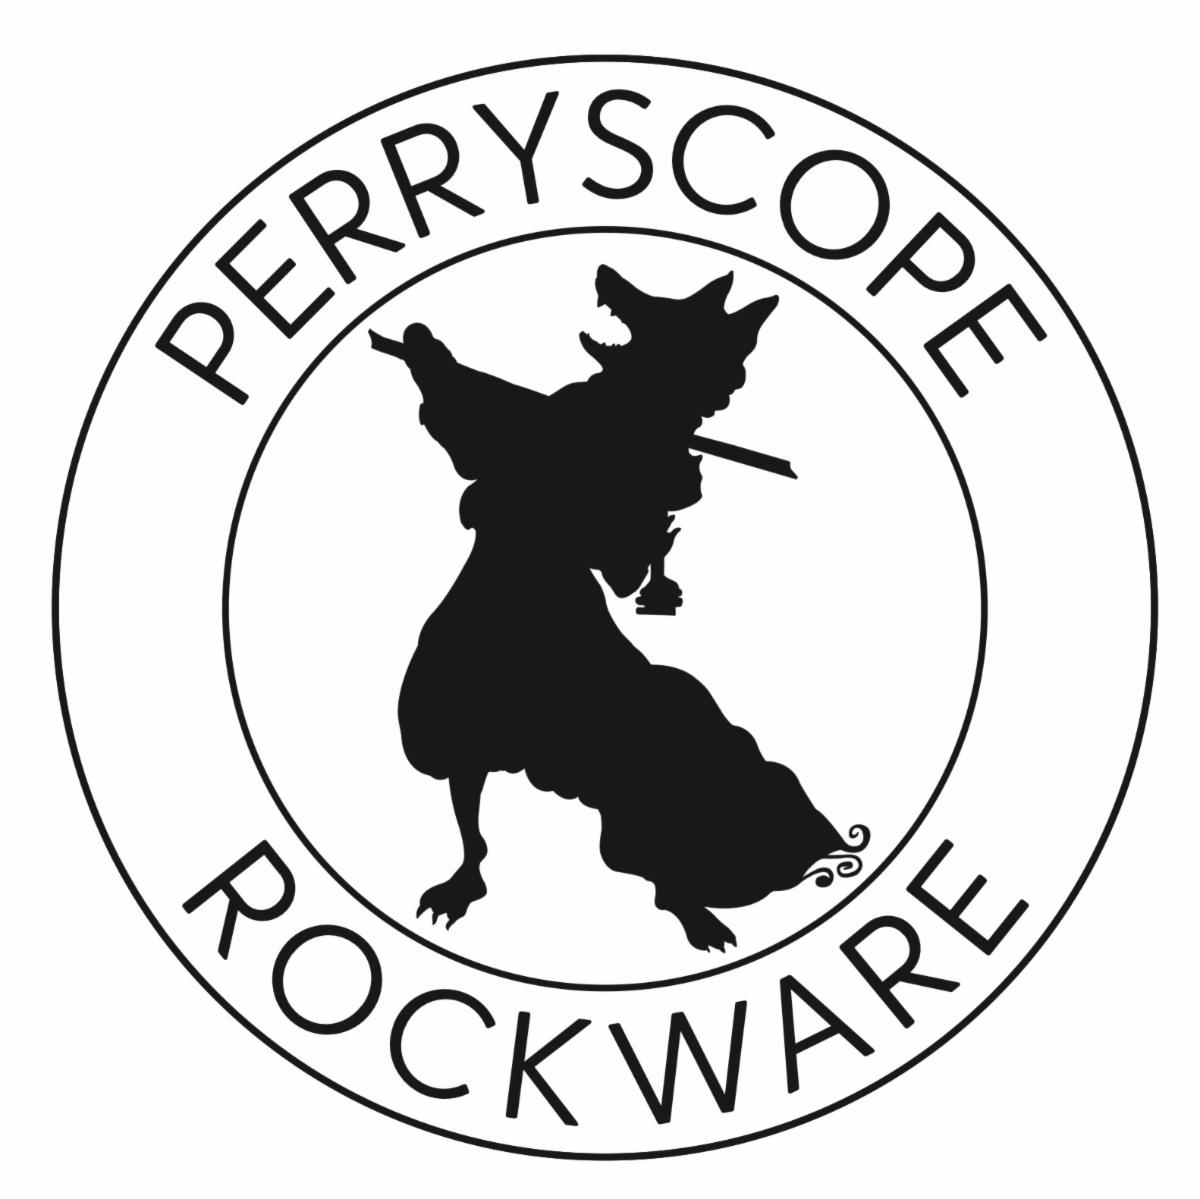 Perryscope_Rockware_Silhouette.jpg